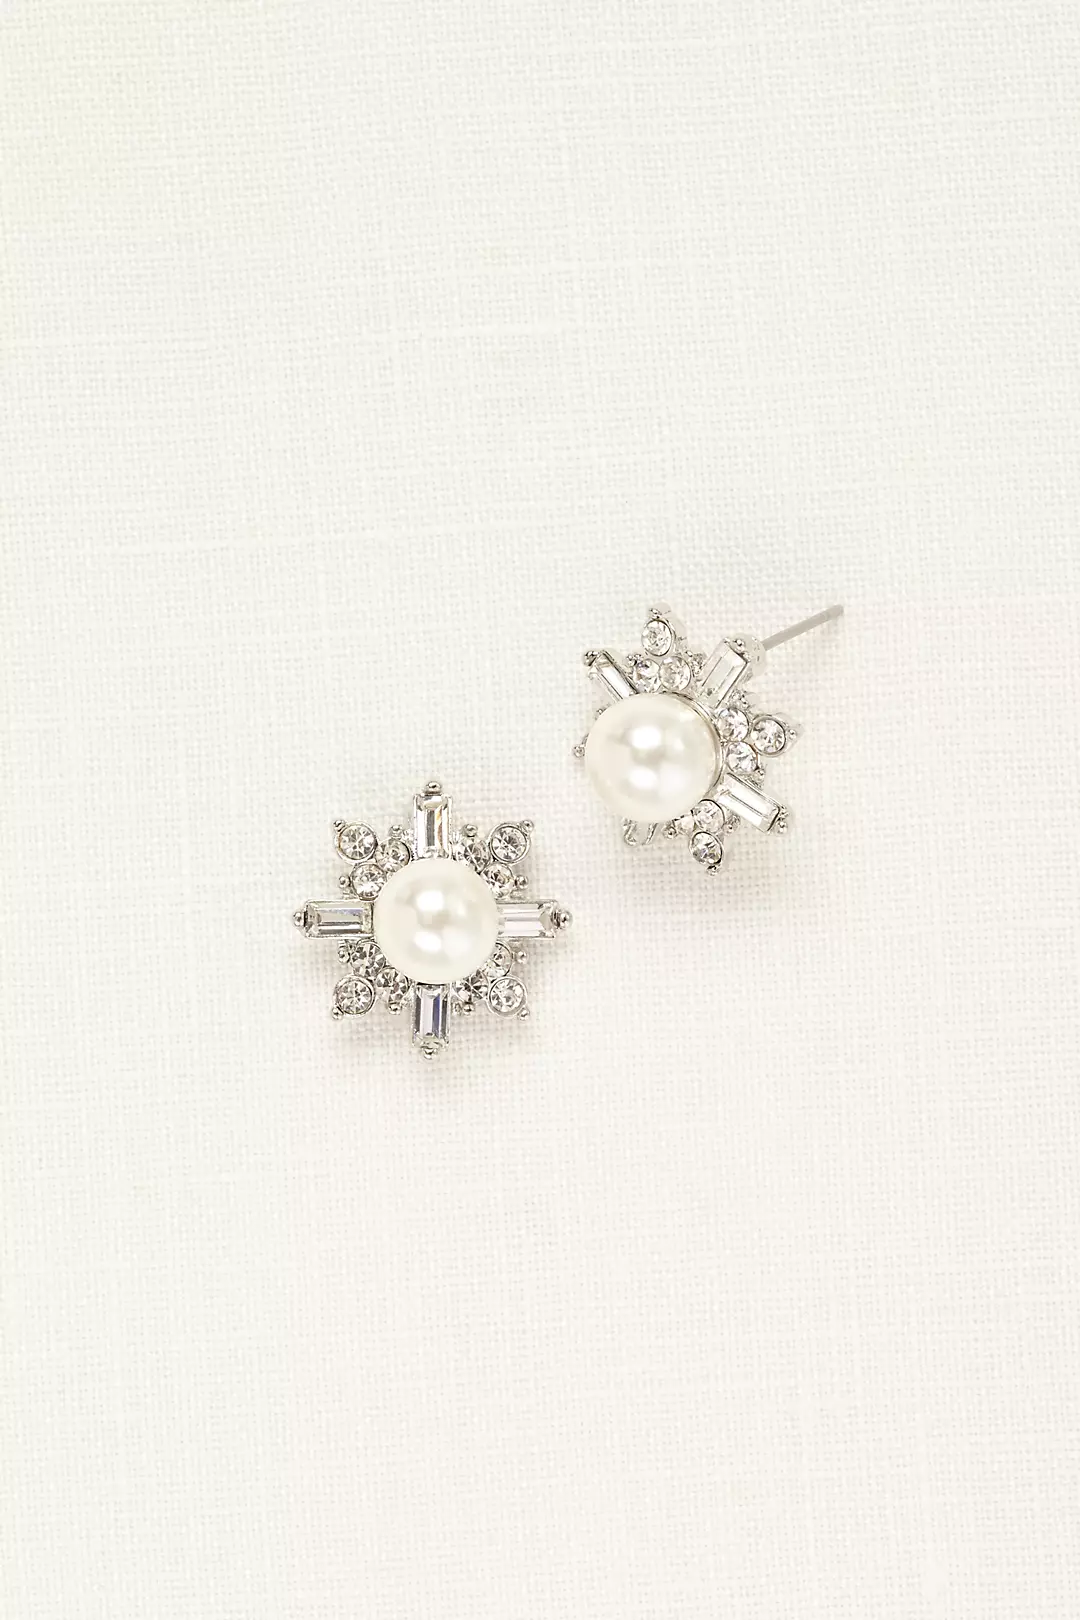 Pearl and Crystal Starburst Earrings Image 2